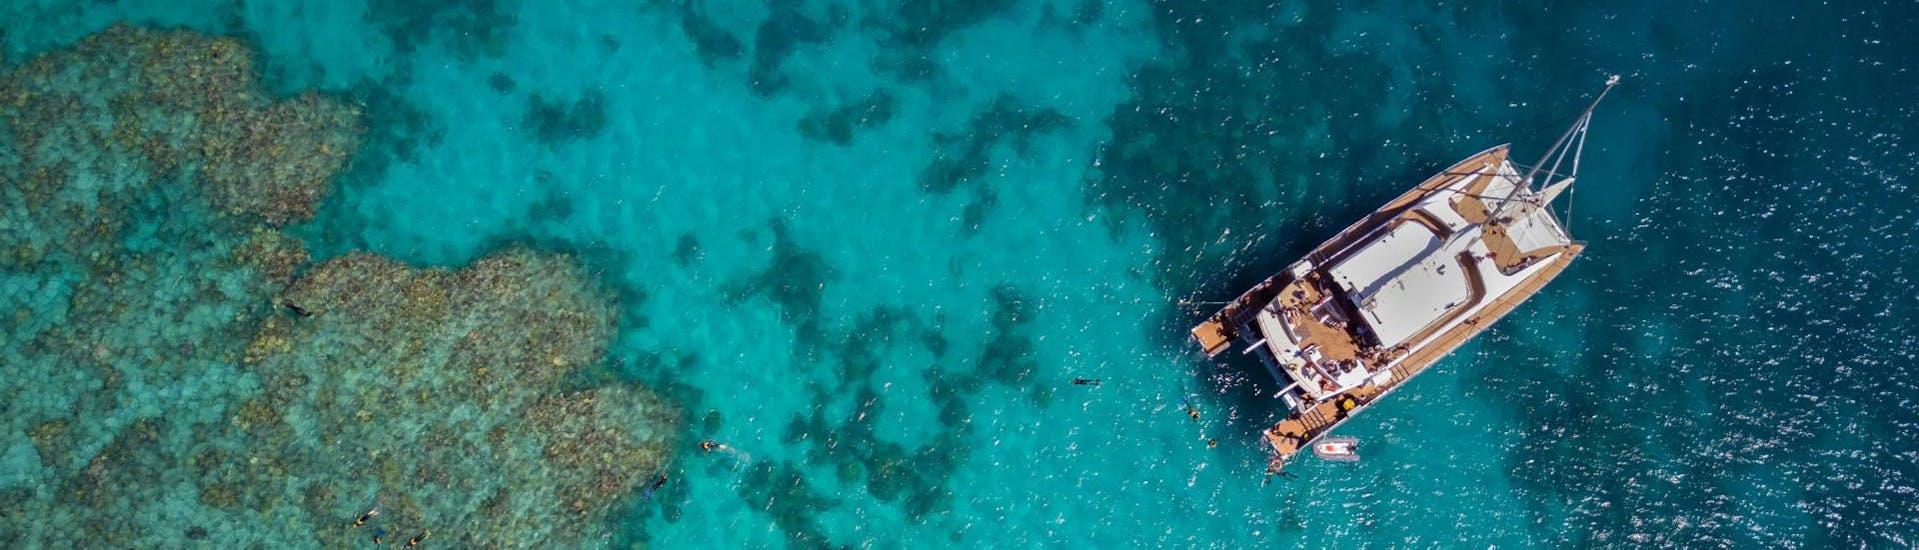 Balade en bateau - Great Barrier Reef avec Baignade.